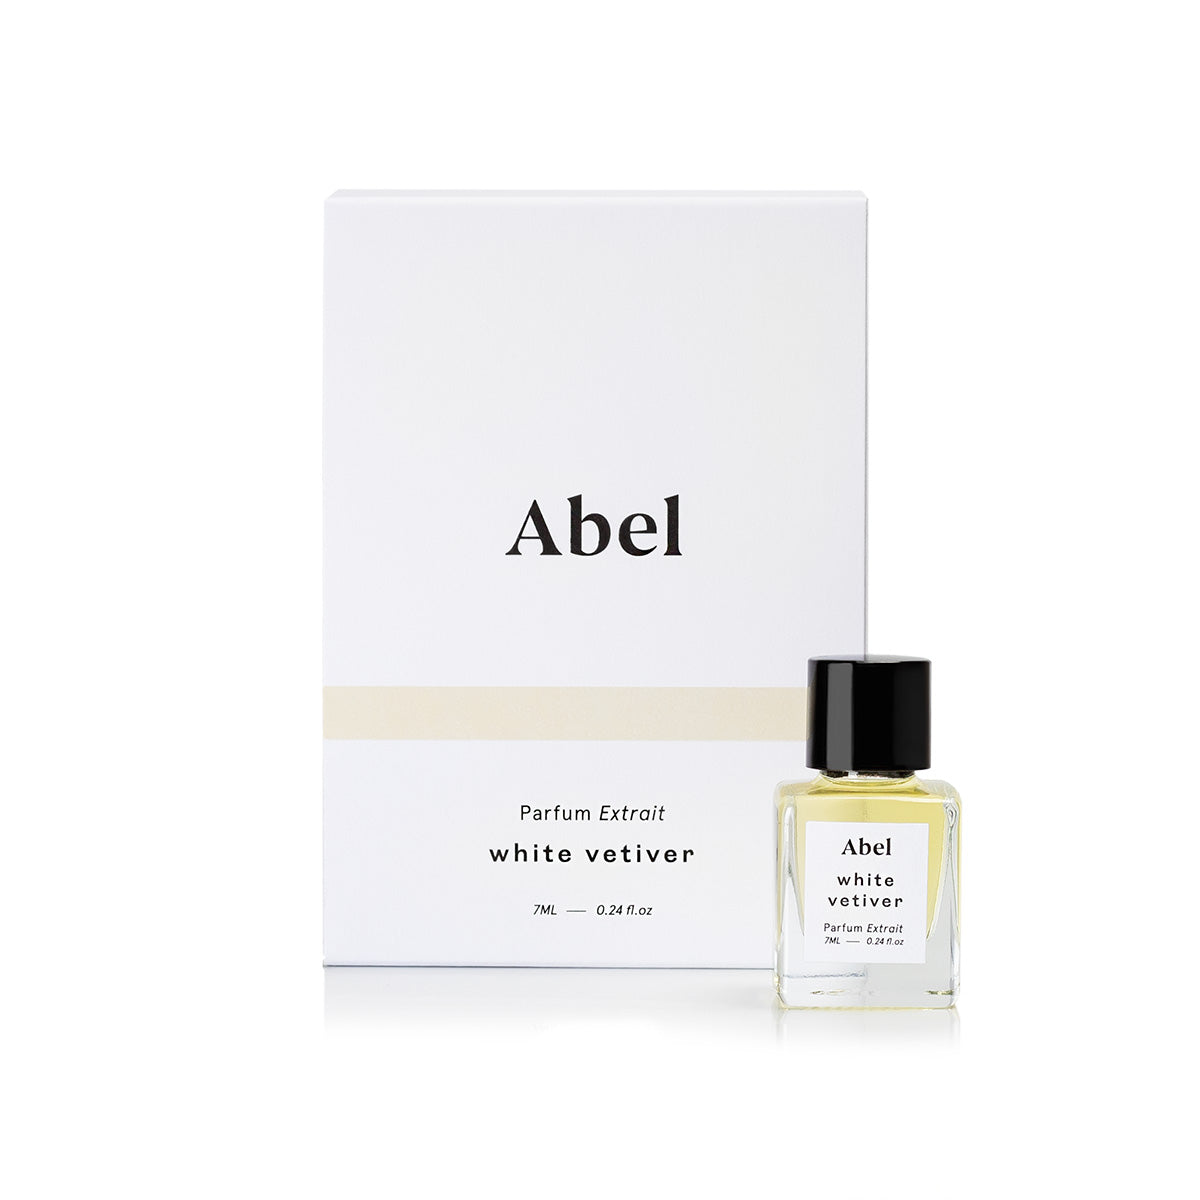 White Vetiver Parfum Extrait 7ml. by Abel at Indigo Perfumery